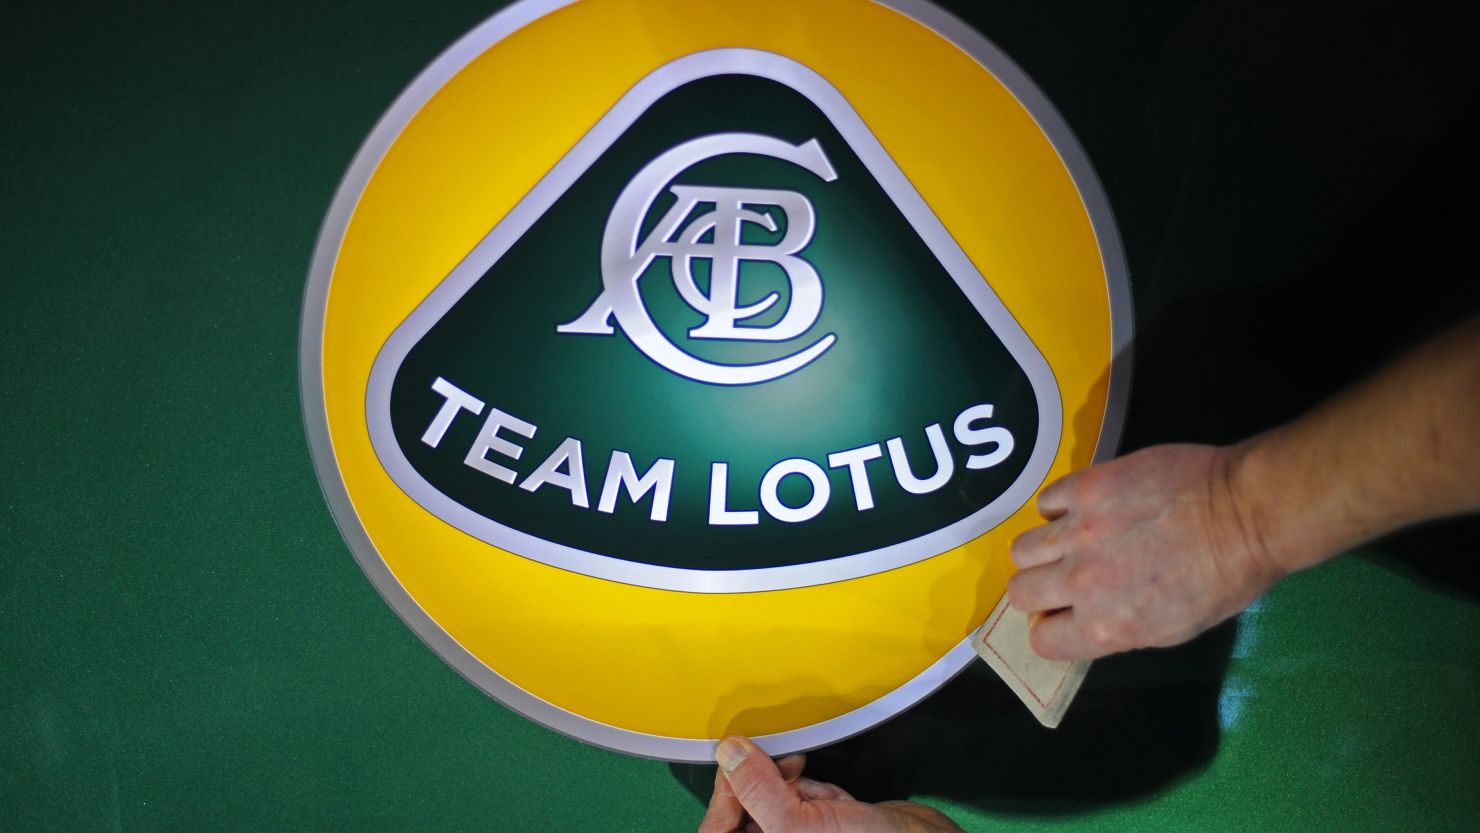 The CNN-sponsored Team Lotus logo will undergo an overhaul ahead of the 2012 season.